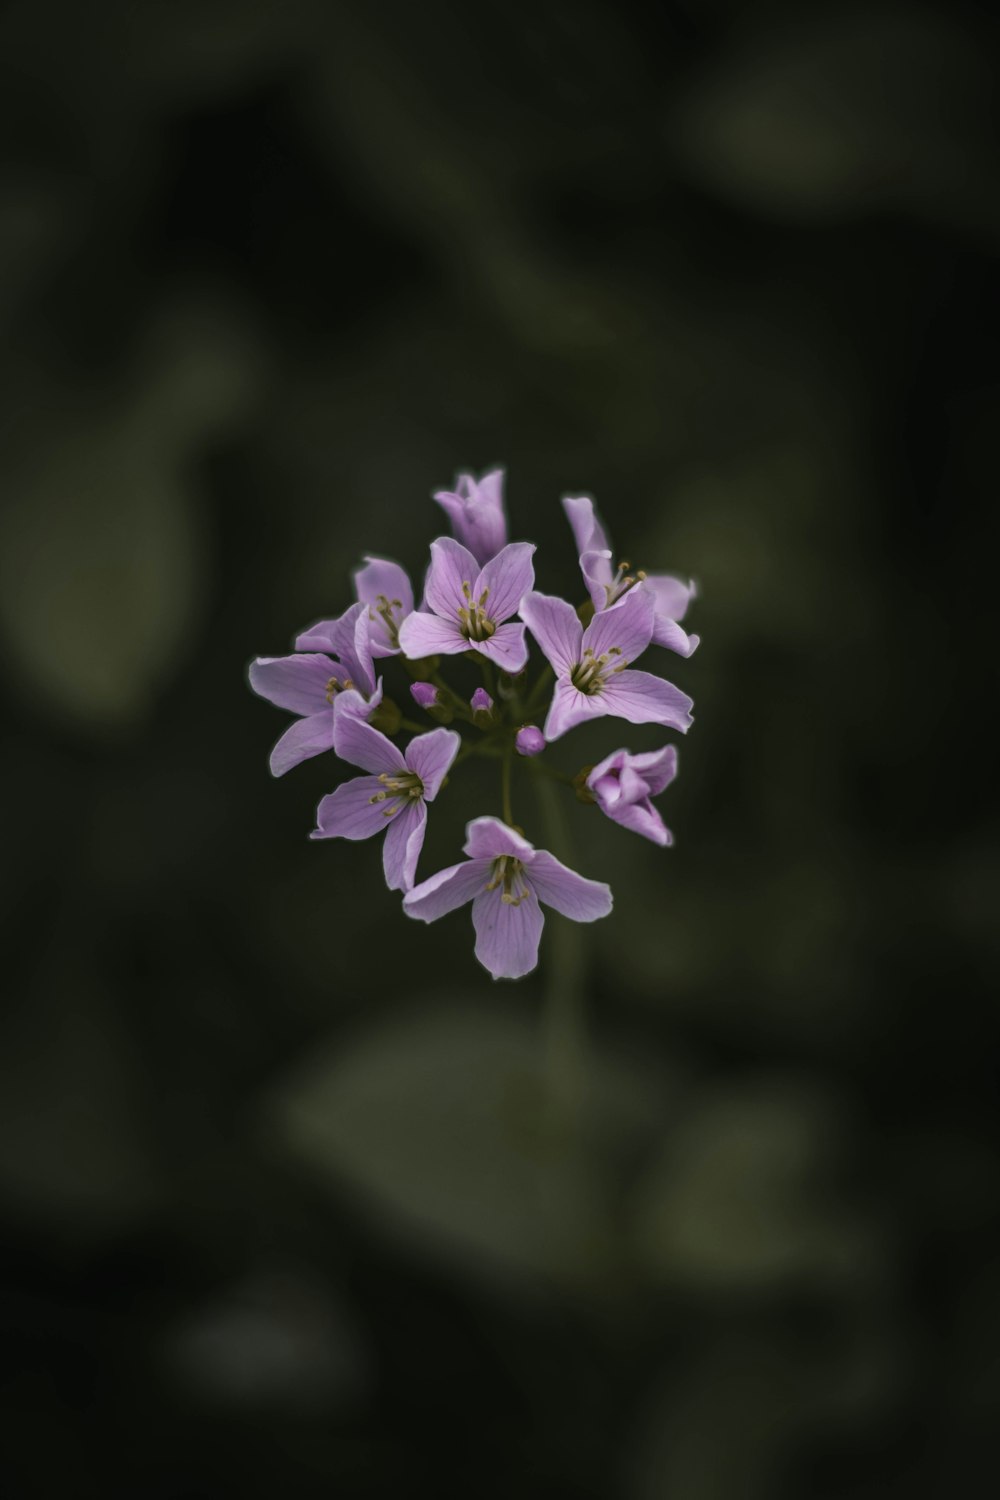 Un primer plano de una flor púrpura en un tallo